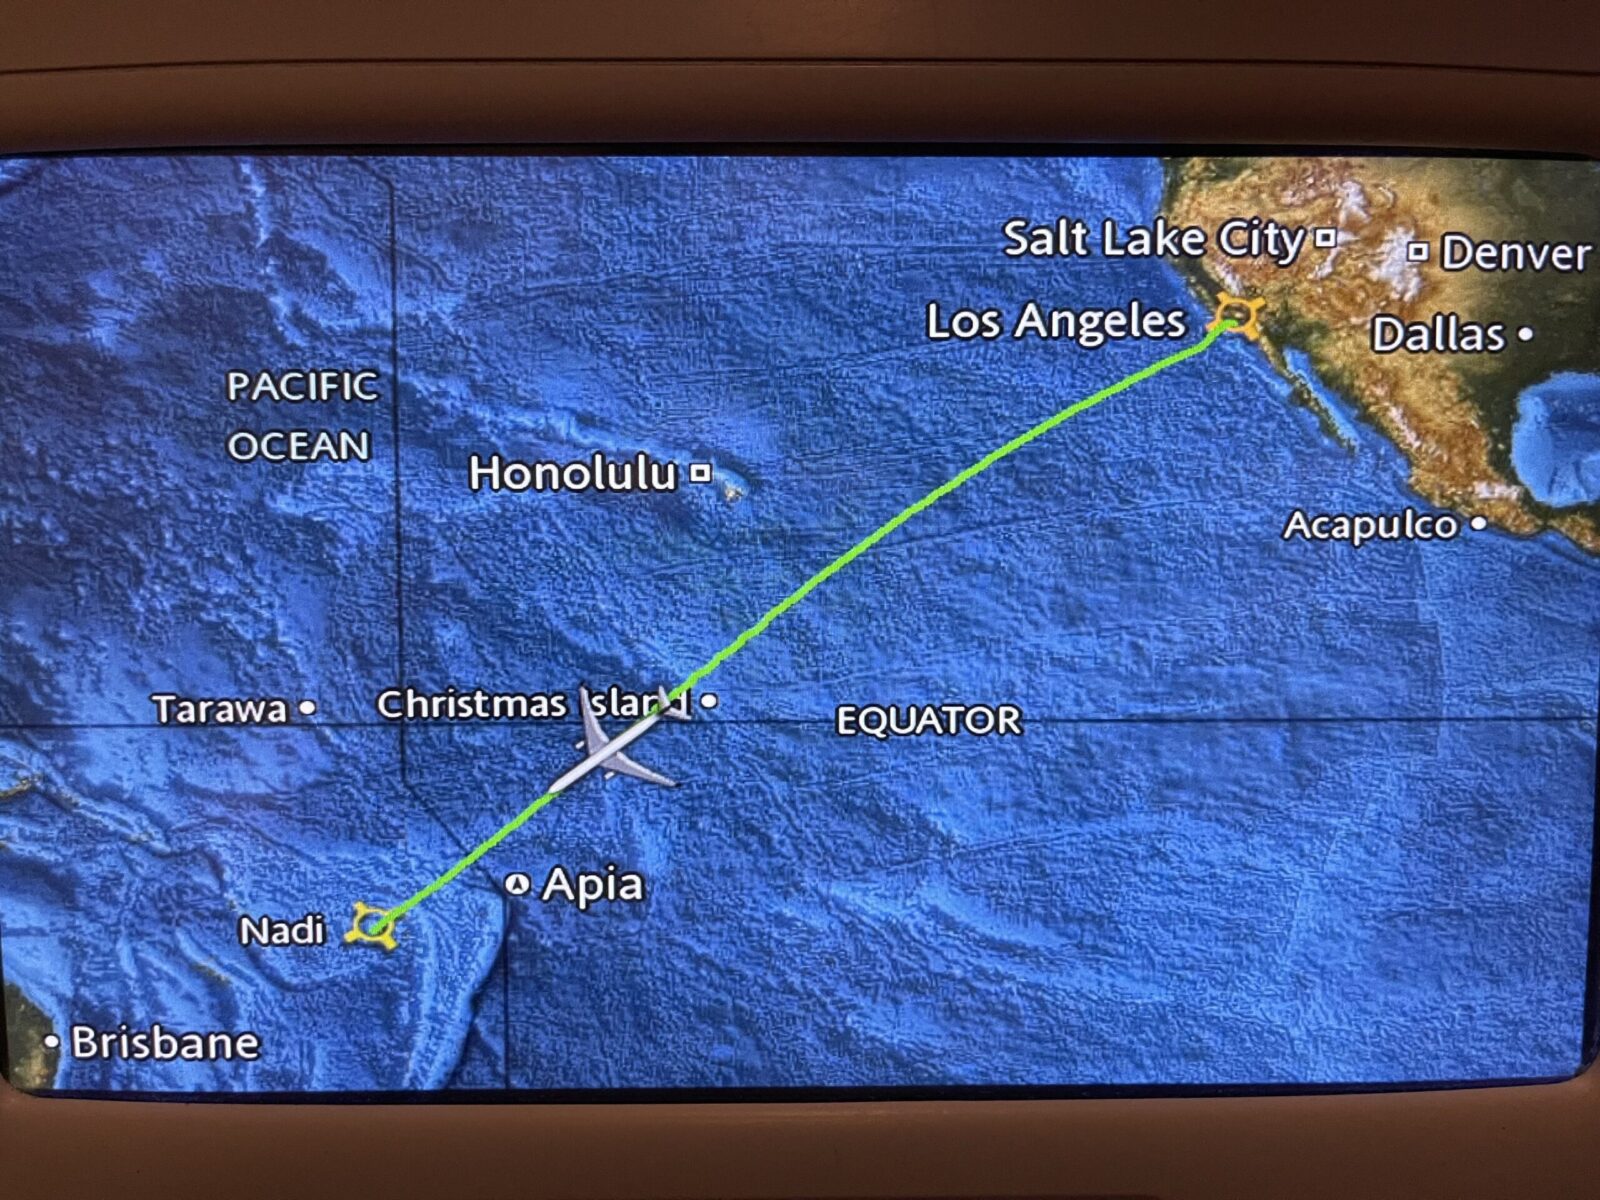 airplane screen showing flight path